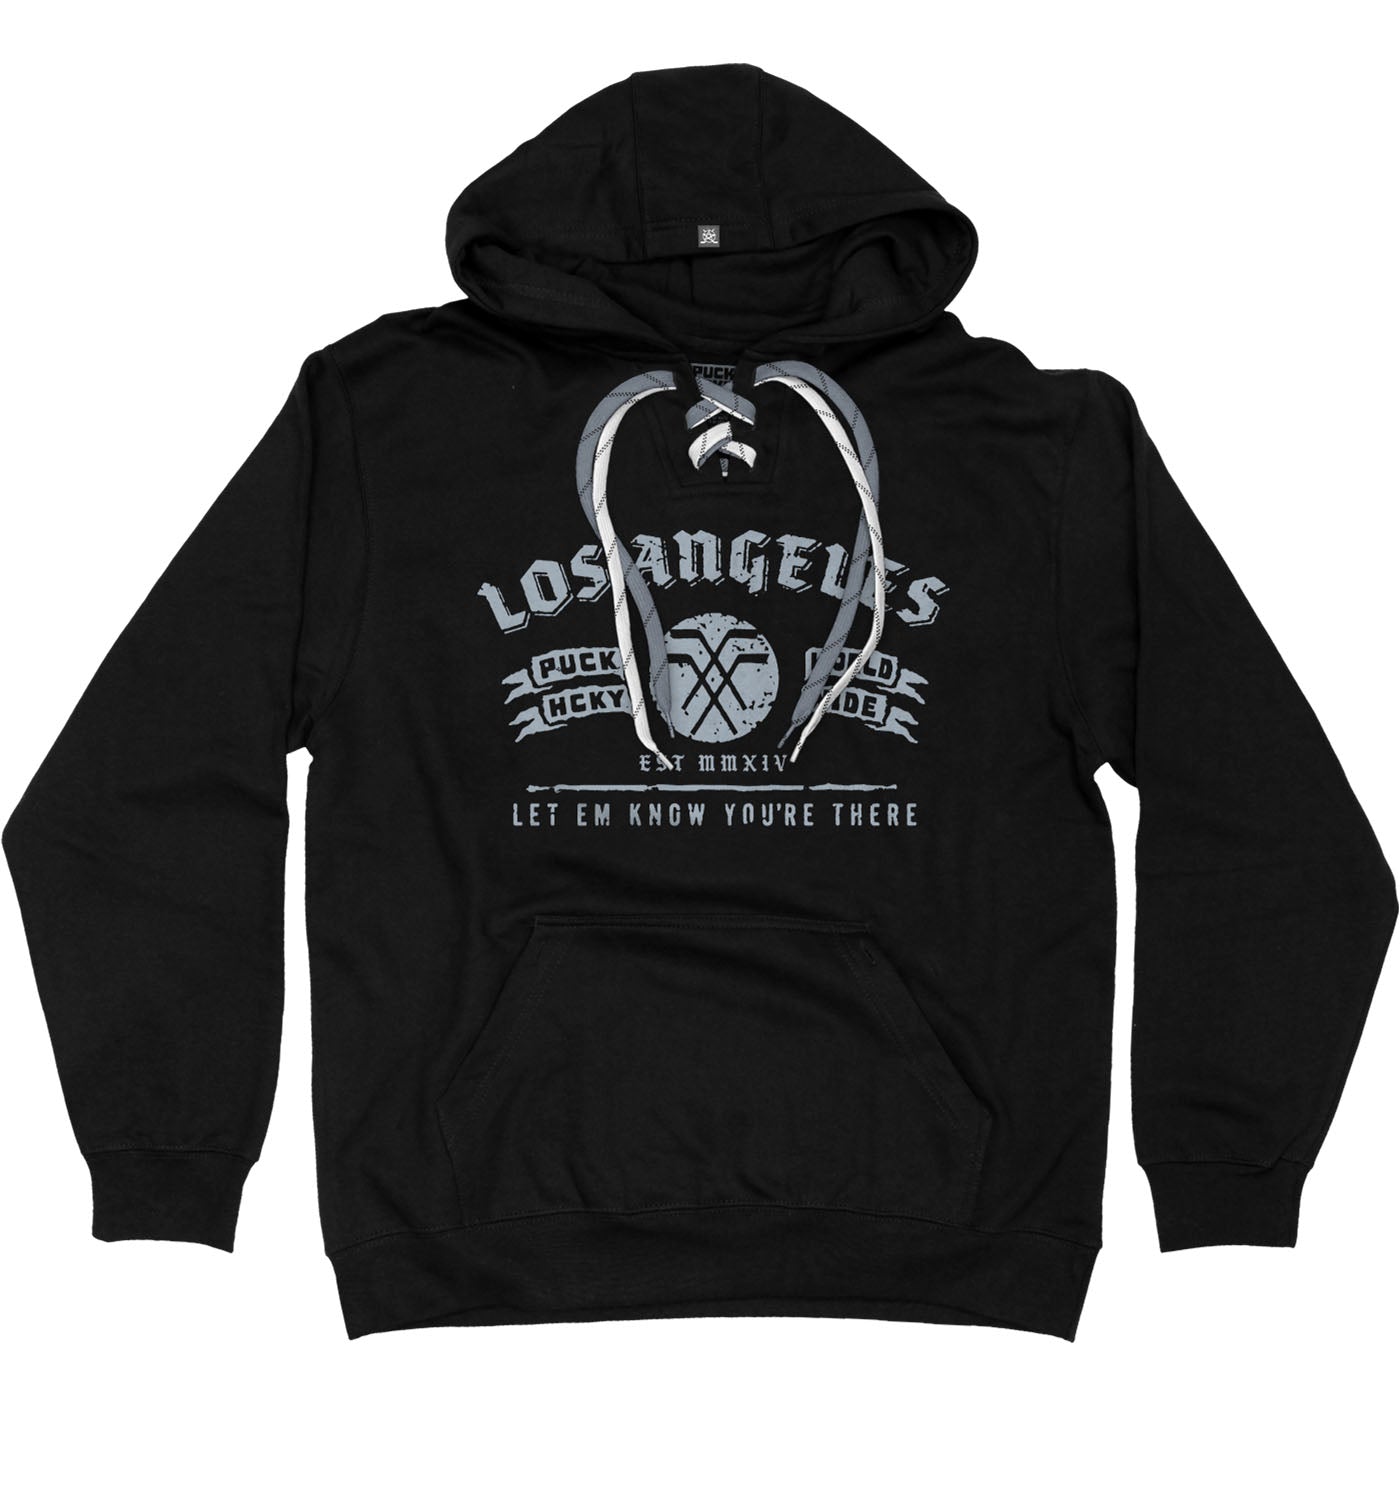 PUCK HCKY 'LA' laced pullover hockey hoodie in black